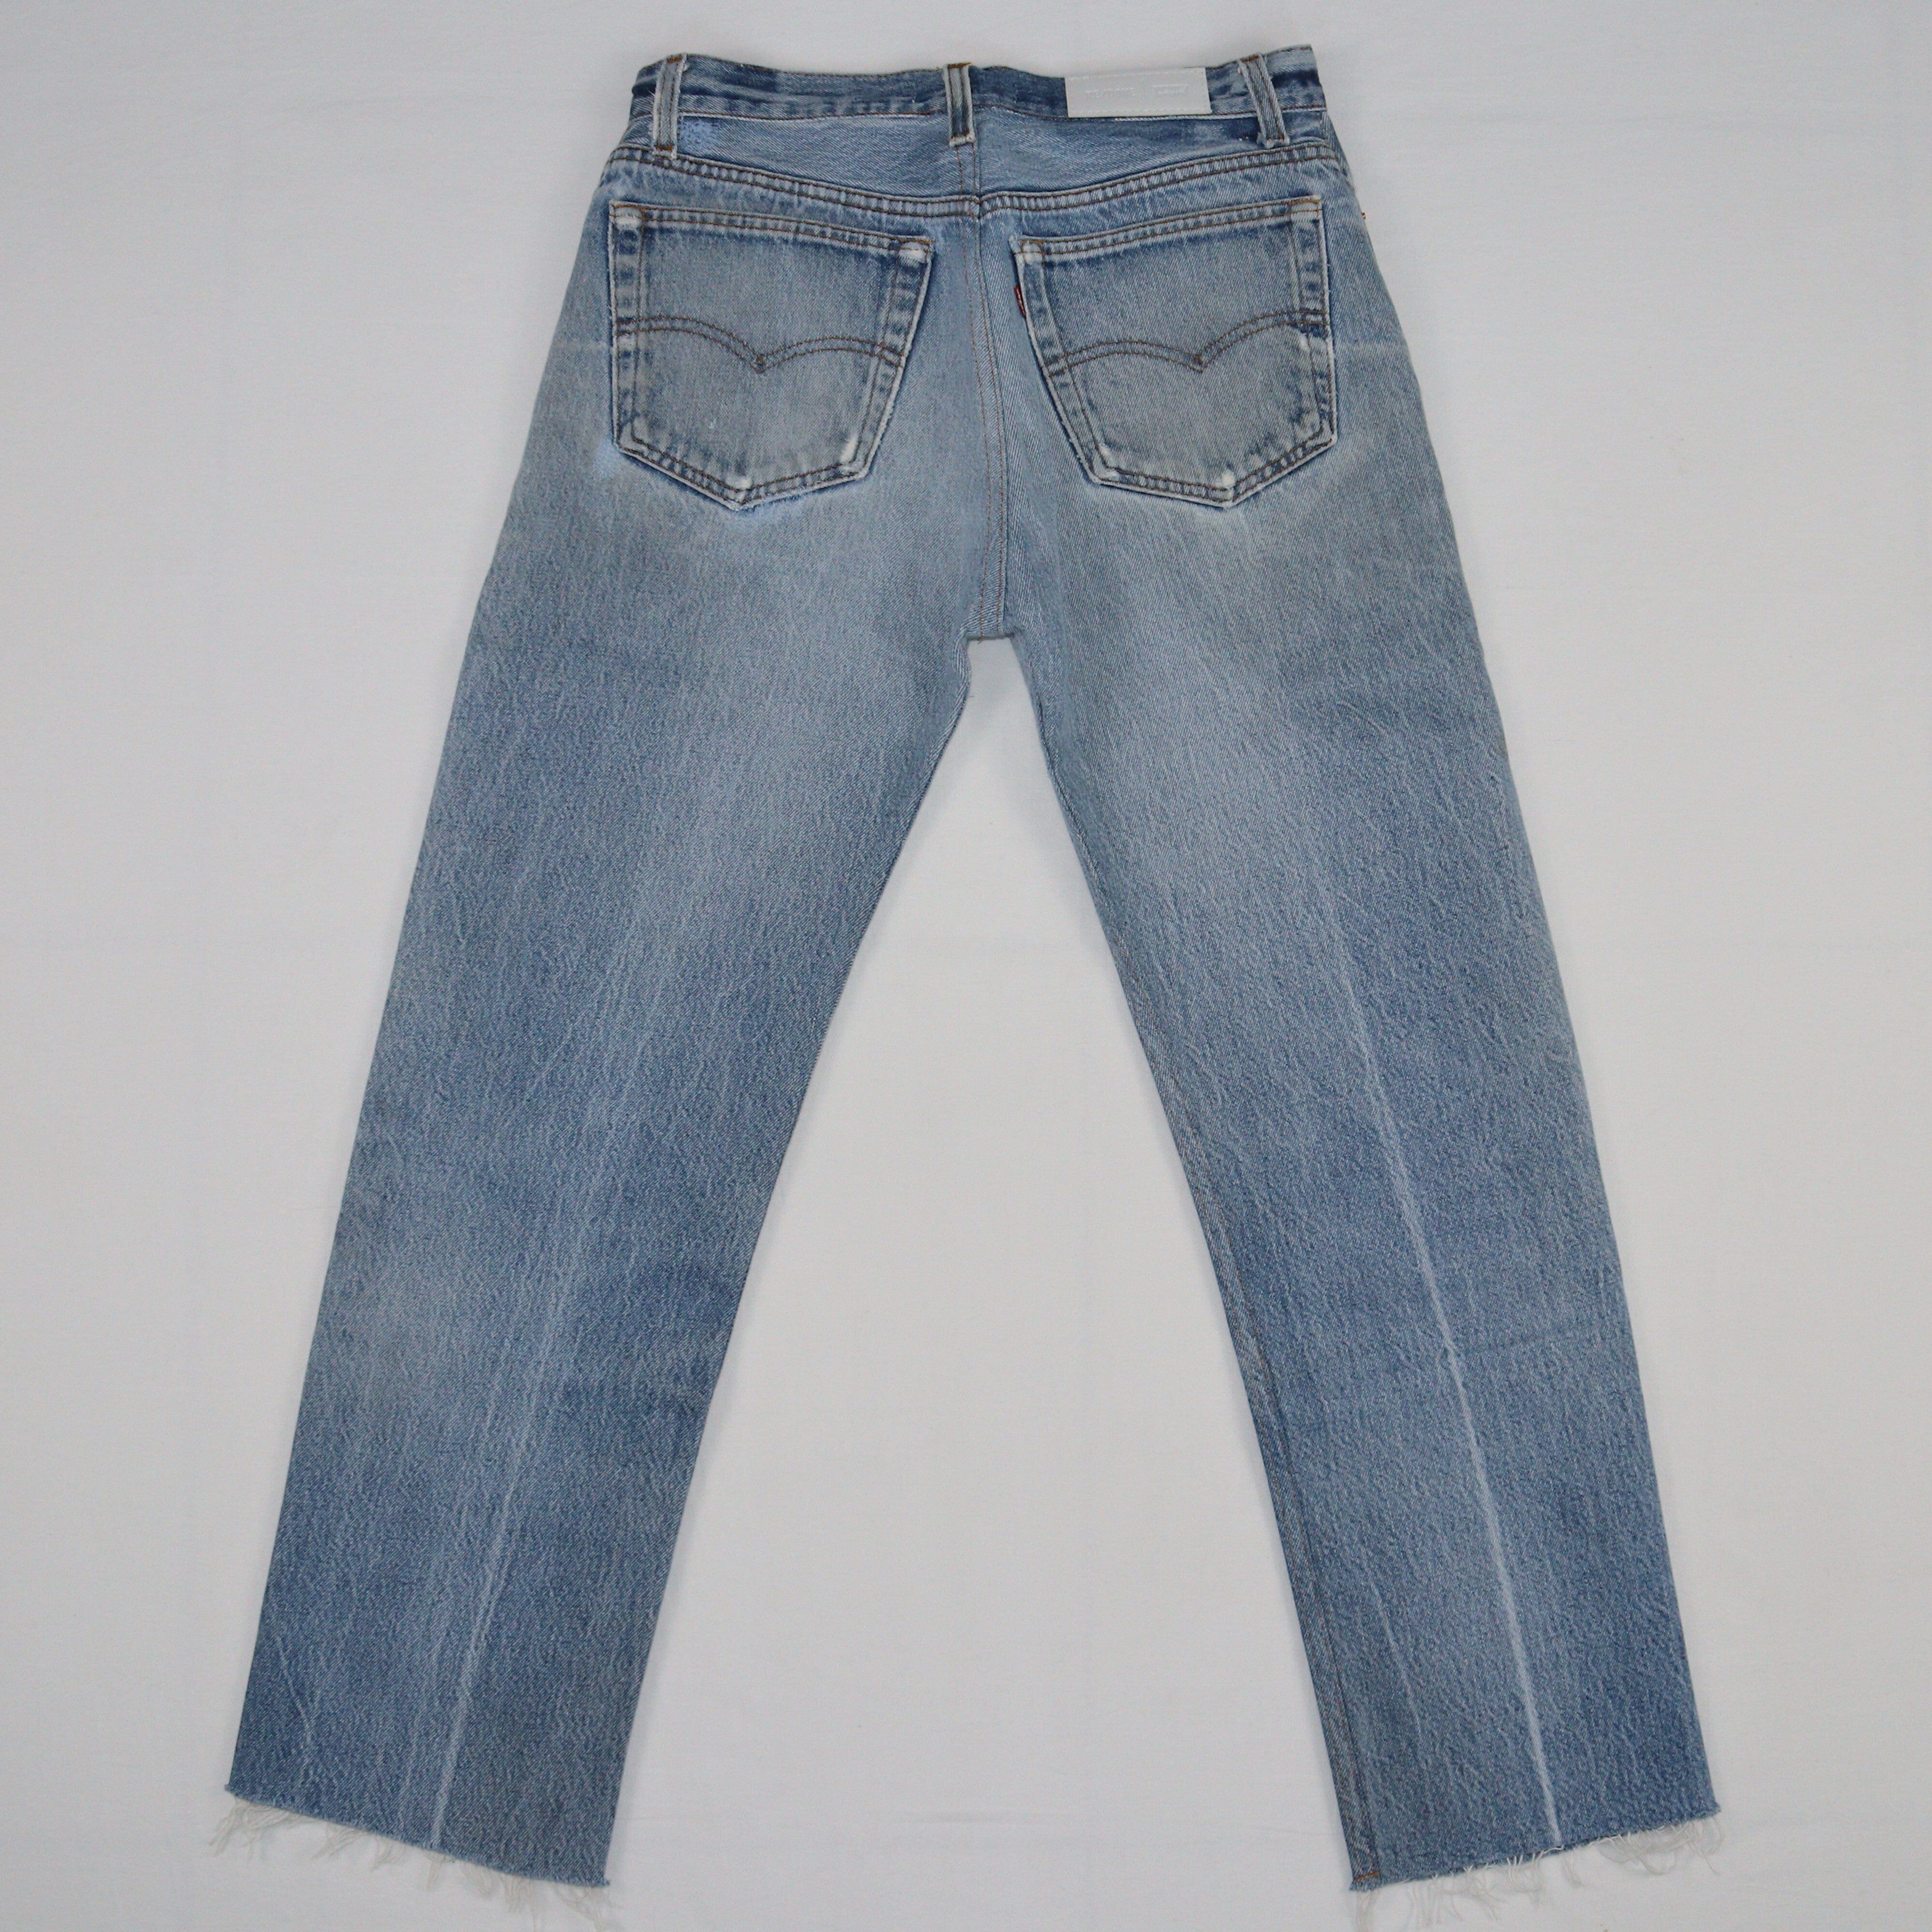 White/Blue Denim Straight Cut Pants Clothings RE/DONE Levis 